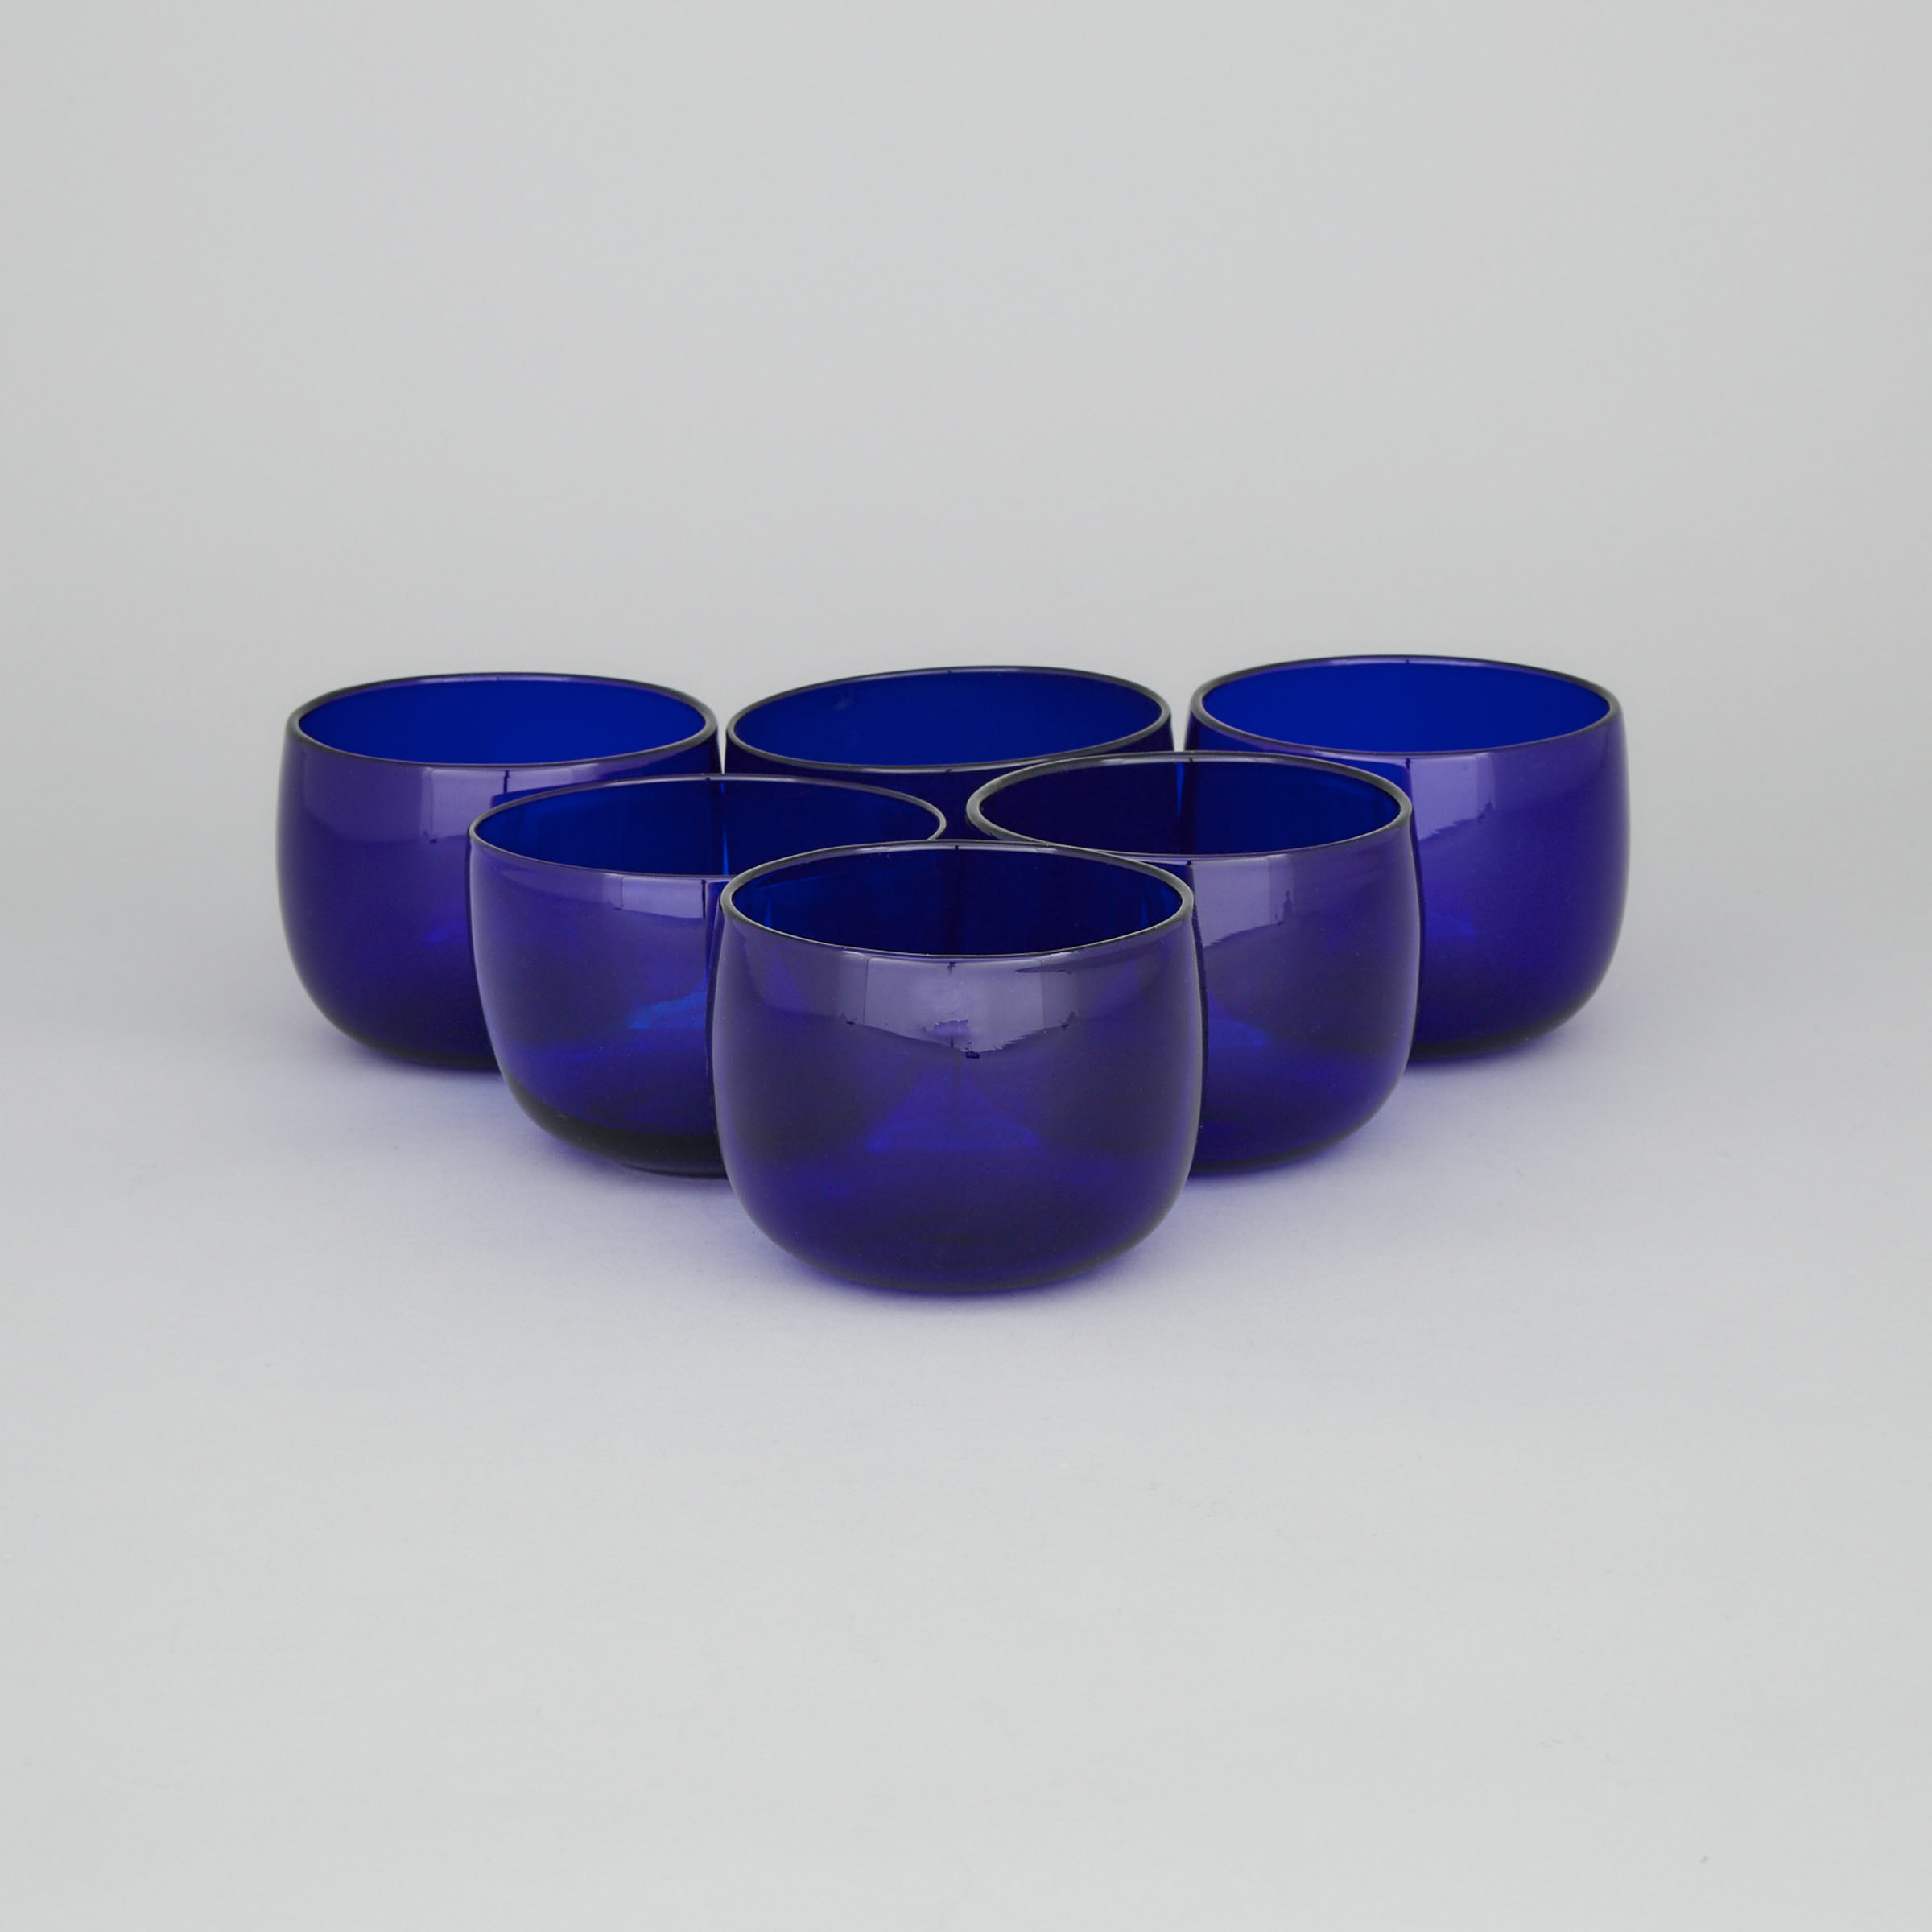 Six English Blue Glass Finger Bowls, 19th century